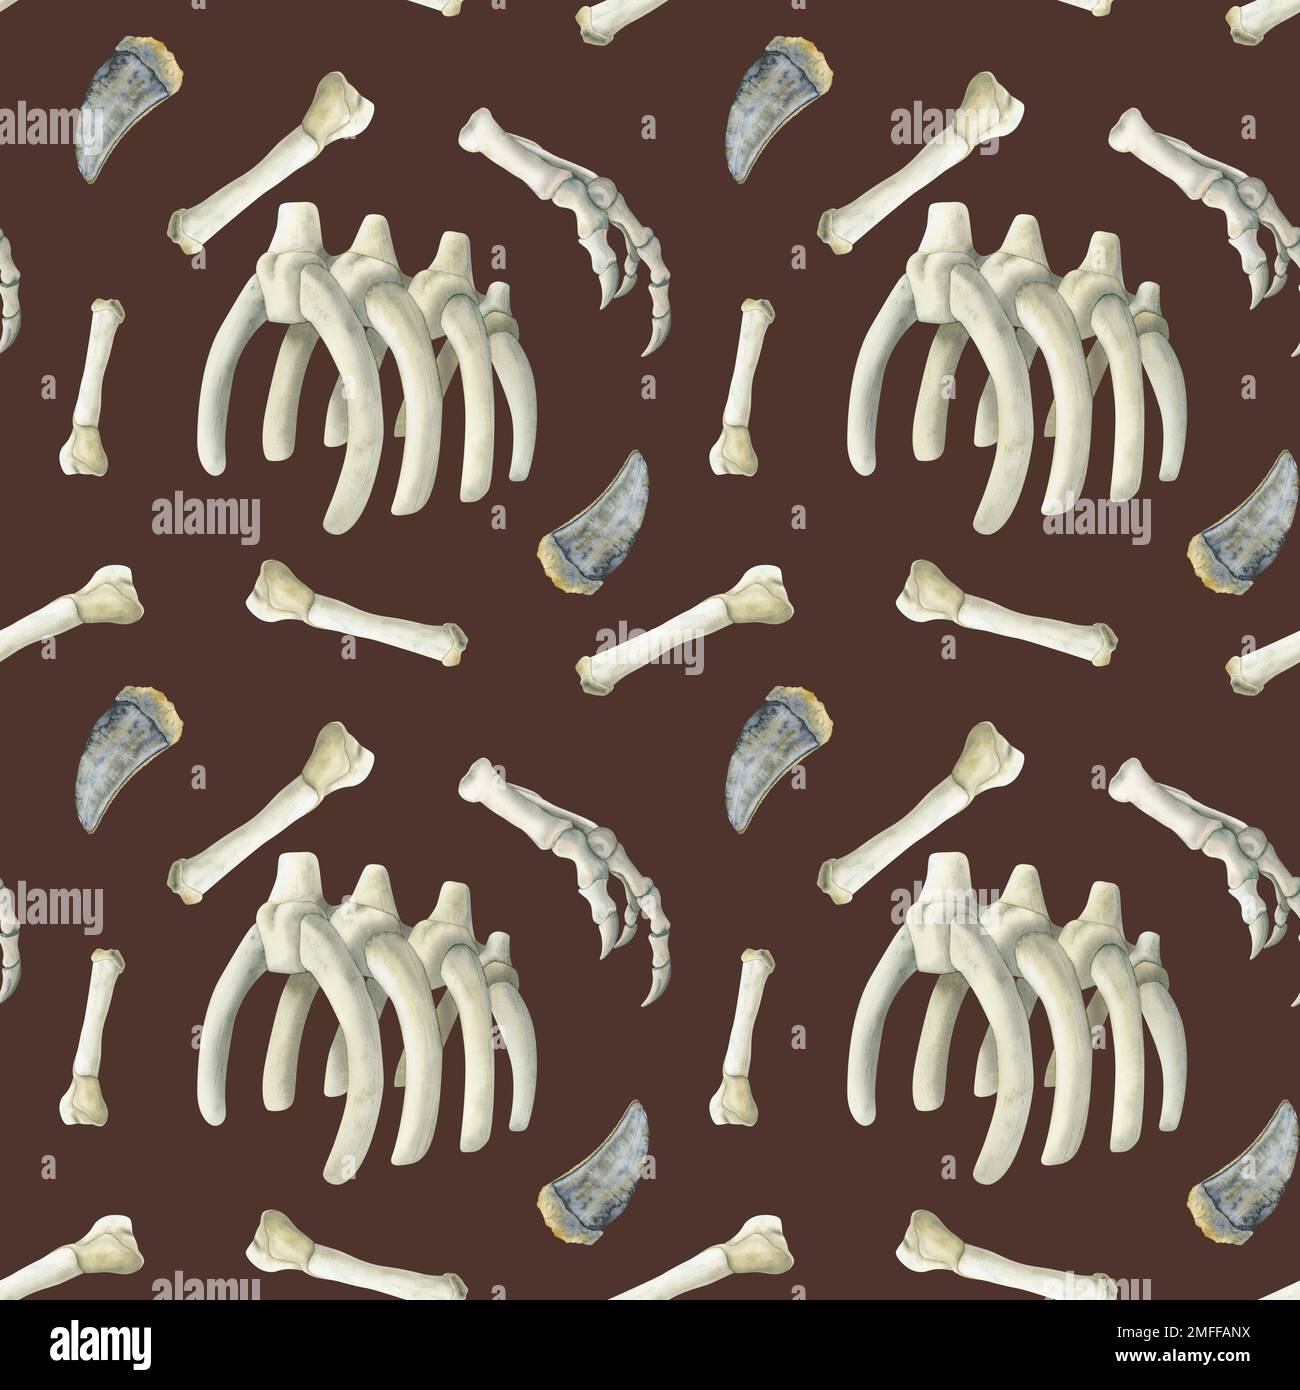 Watercolor dinosaur fossil bones seamless pattern with realistic Tyrannosaurus teeth, hand, ribs on dark brown background. Stock Photo